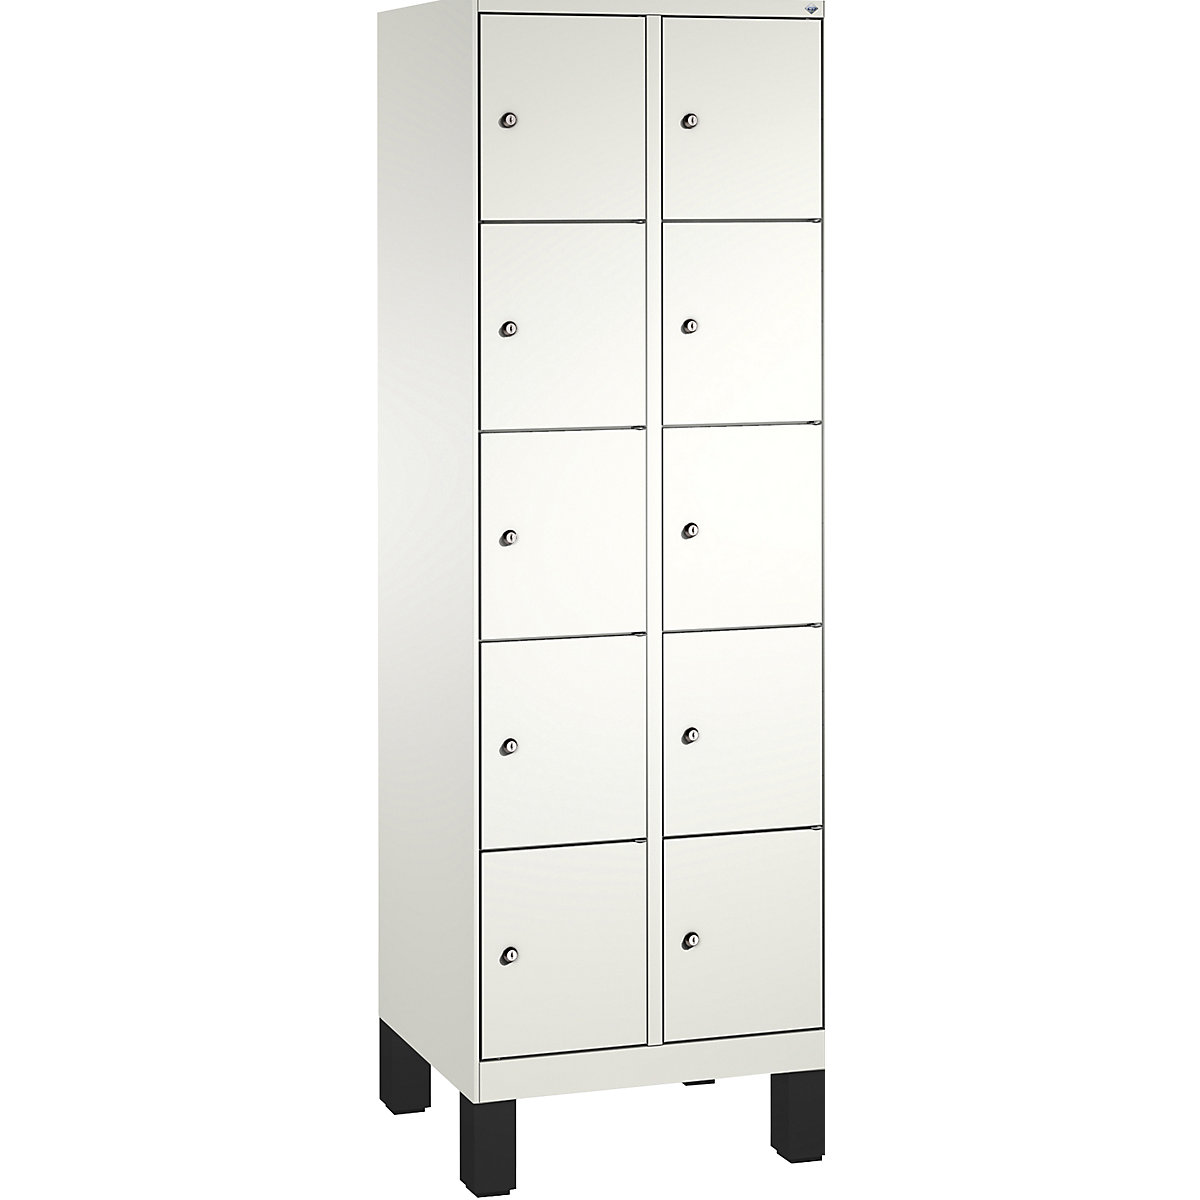 EVOLO locker unit, with feet – C+P, 2 compartments, 5 shelf compartments each, compartment width 300 mm, traffic white / traffic white-6